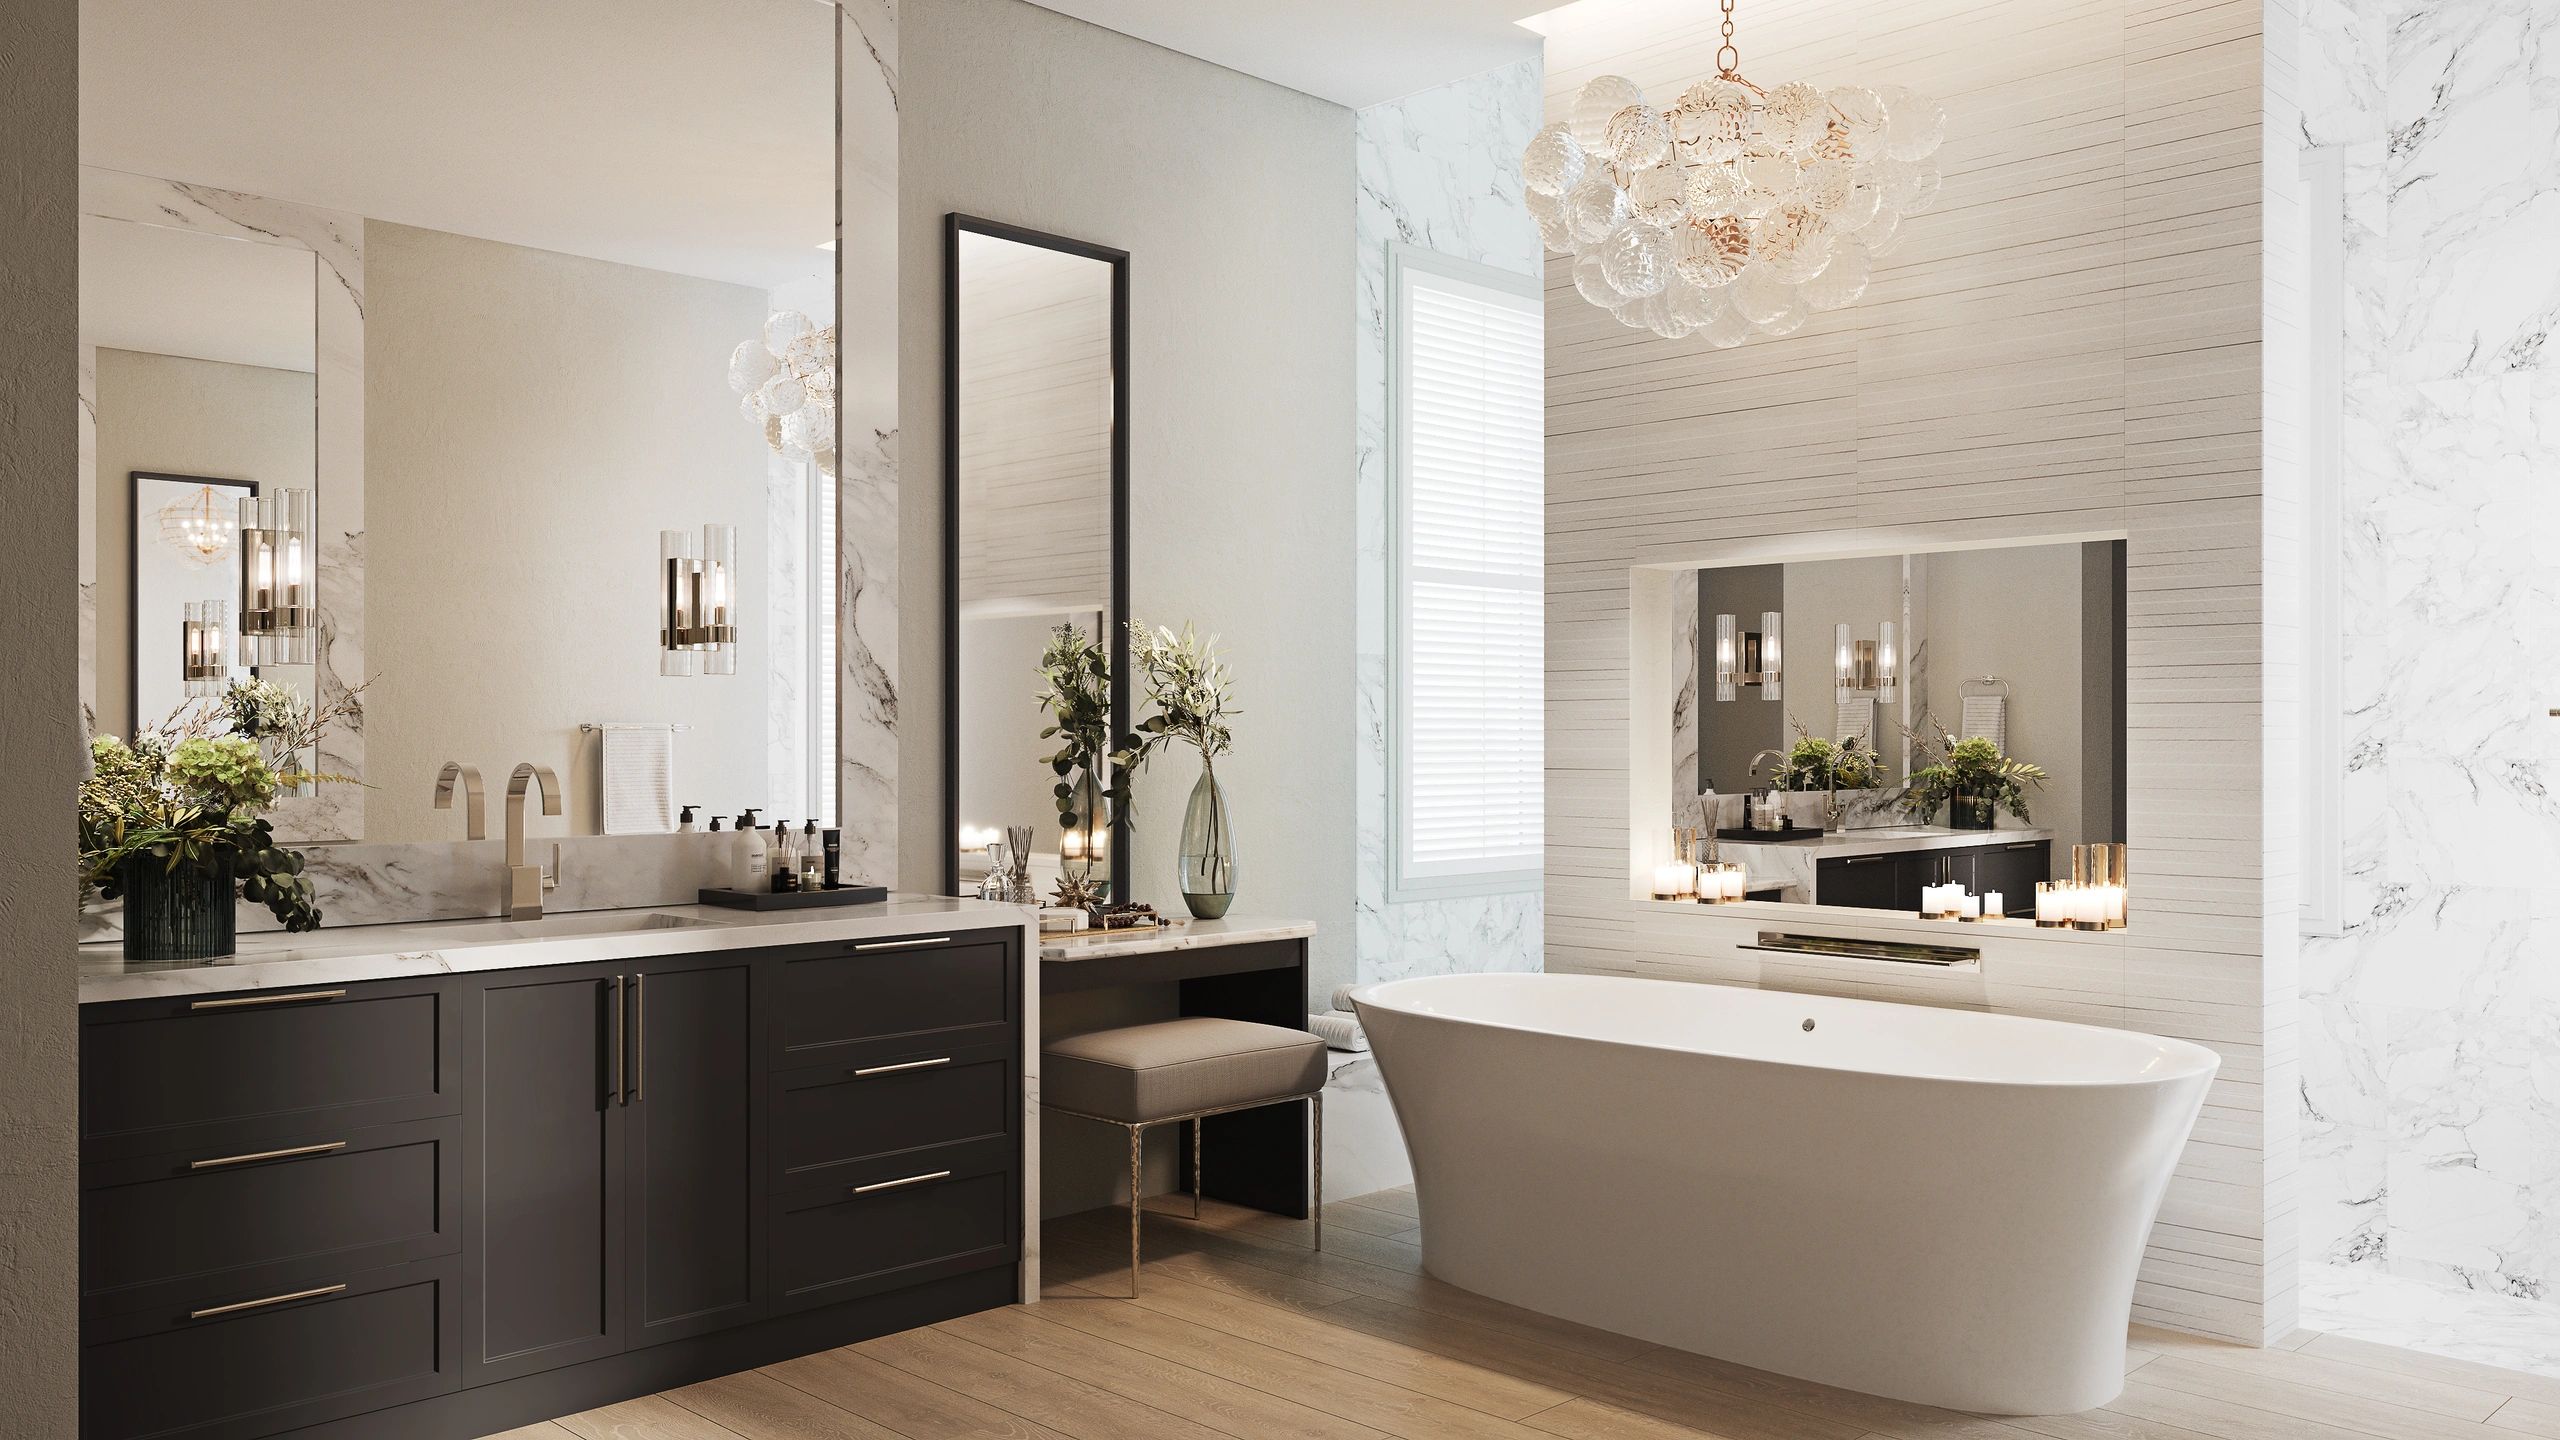 luxury interior design, Master Bathroom, Freestanding tub. vanity, chandelier mirror